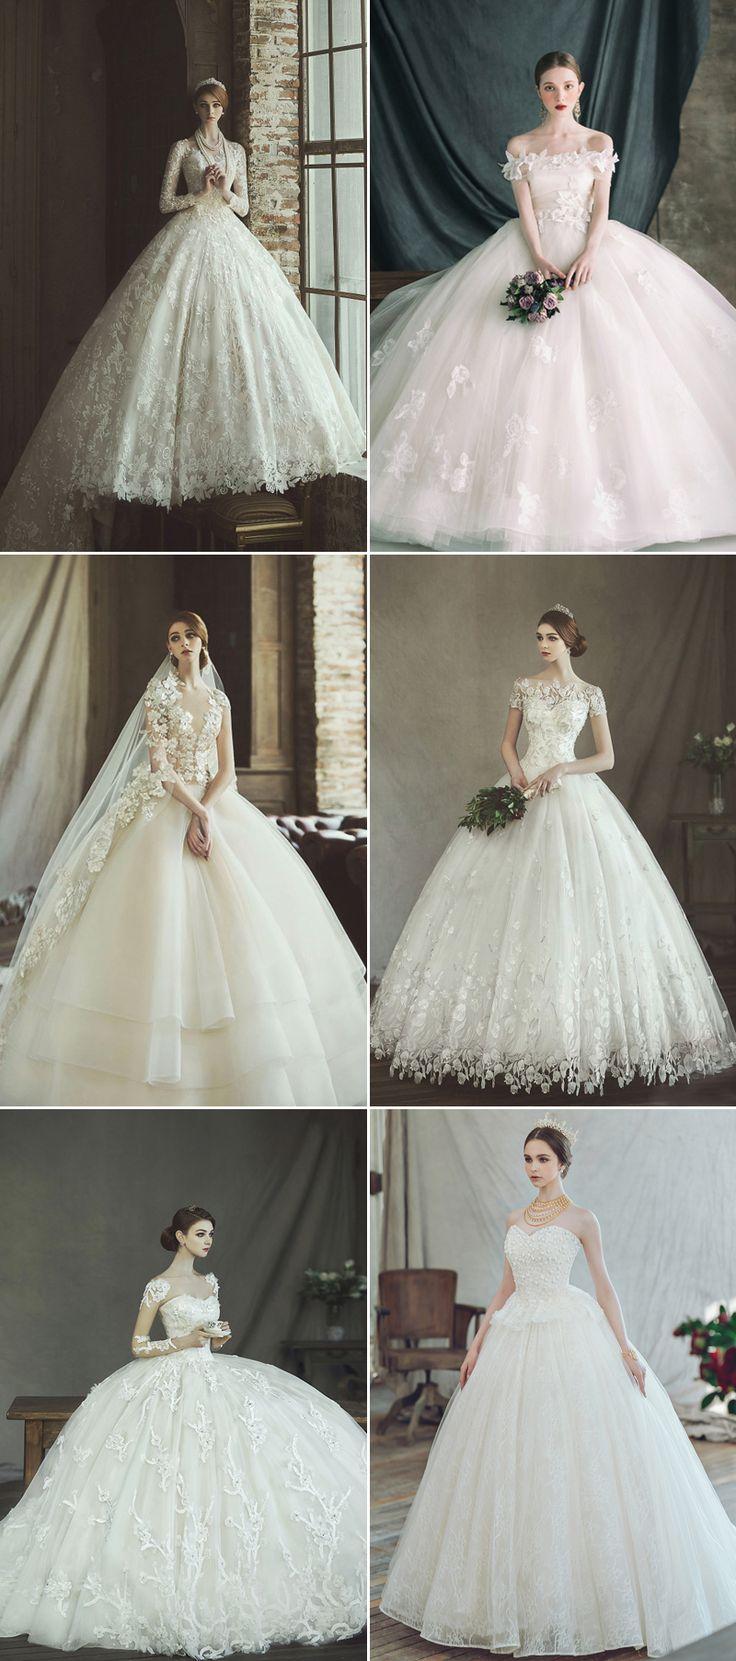 Wedding - Make A Romantic Regal Statement! 28 Princess-Worthy Wedding Gowns You'll Love